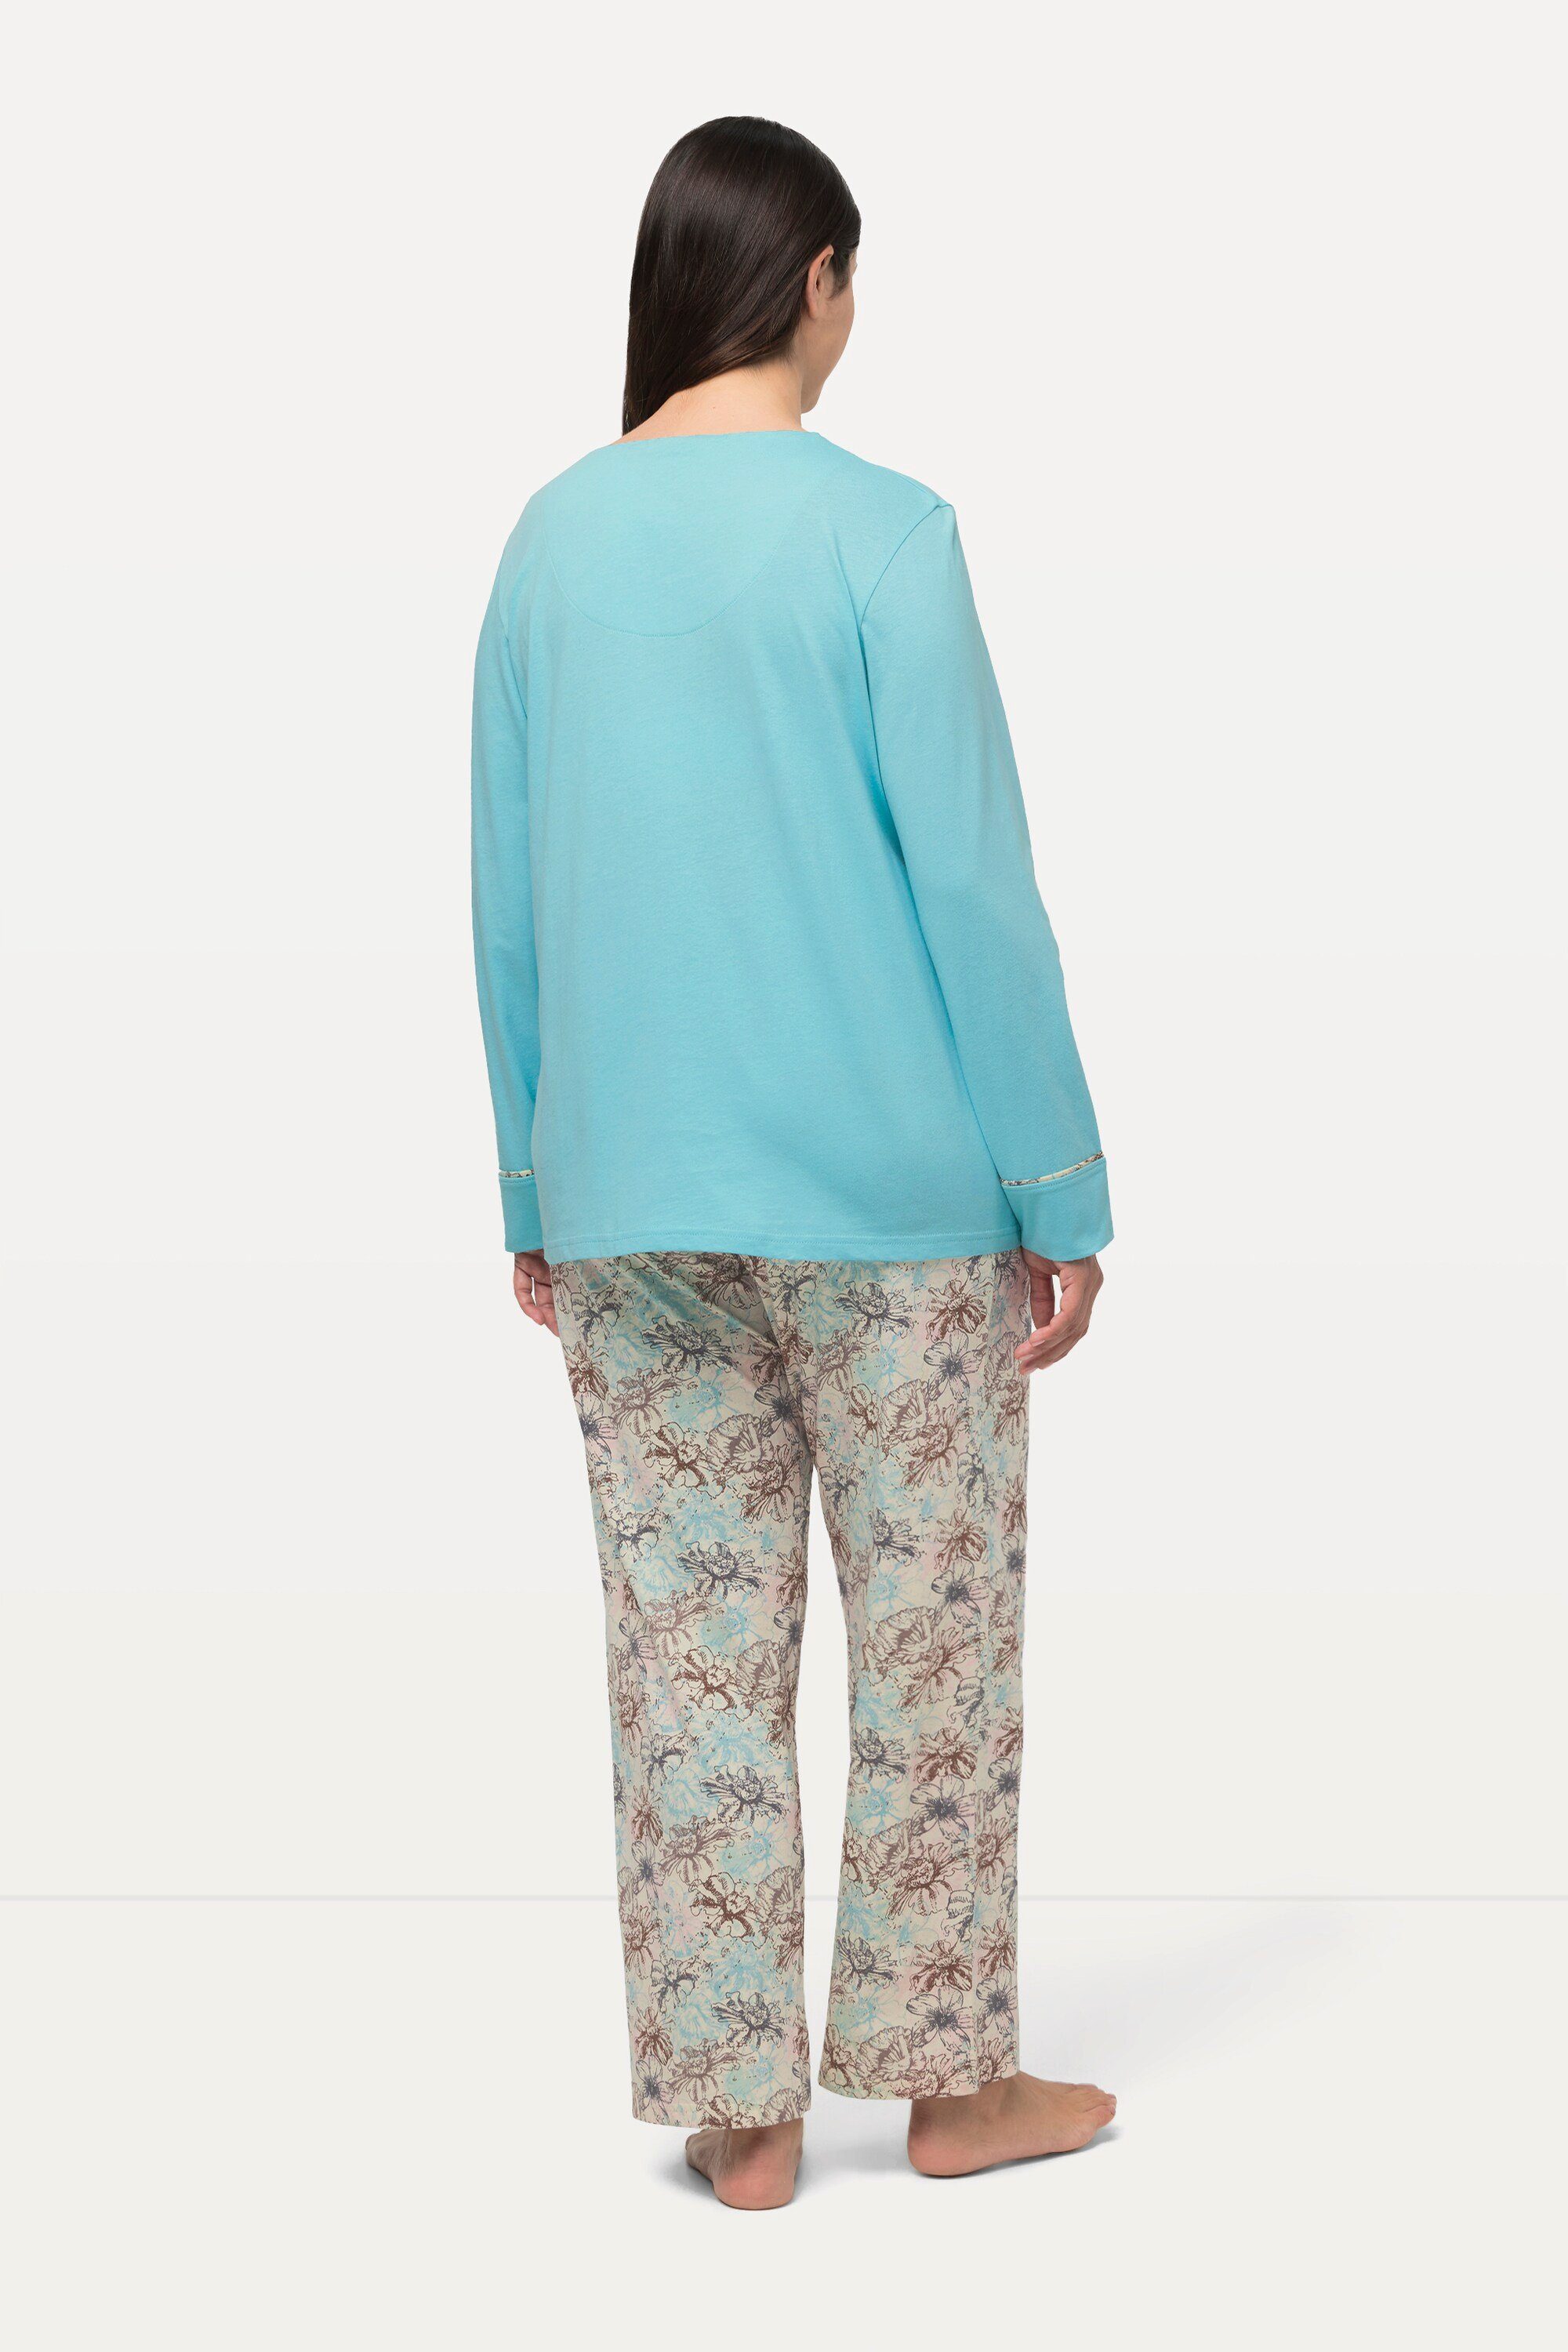 Popken Langarm Ulla Tunika-Ausschnitt Taschen Pyjama Schlafanzug